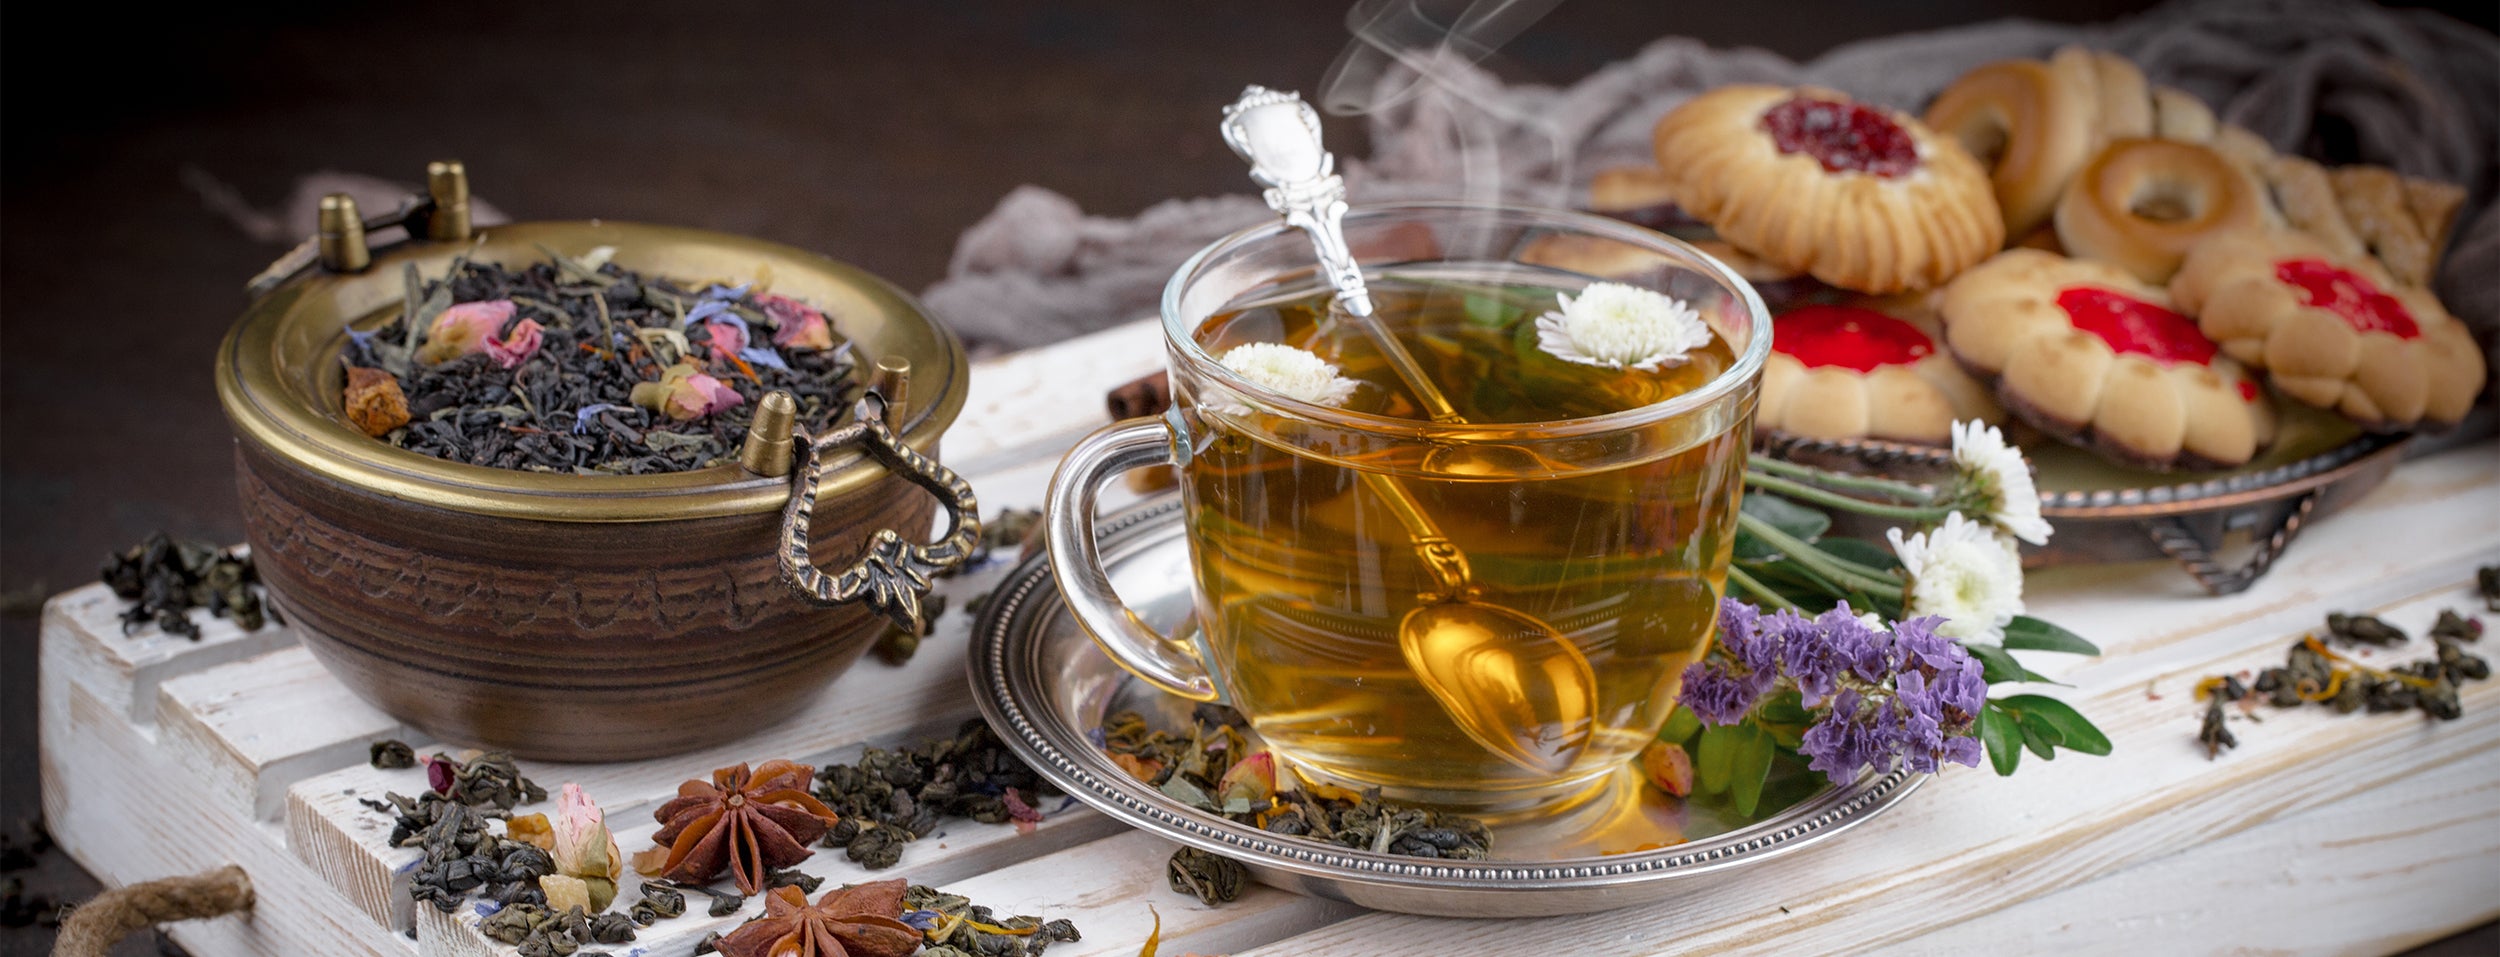 Uptown Tea Shop: Premium Loose Leaf Tea & Accessories - Connoisseur Teas